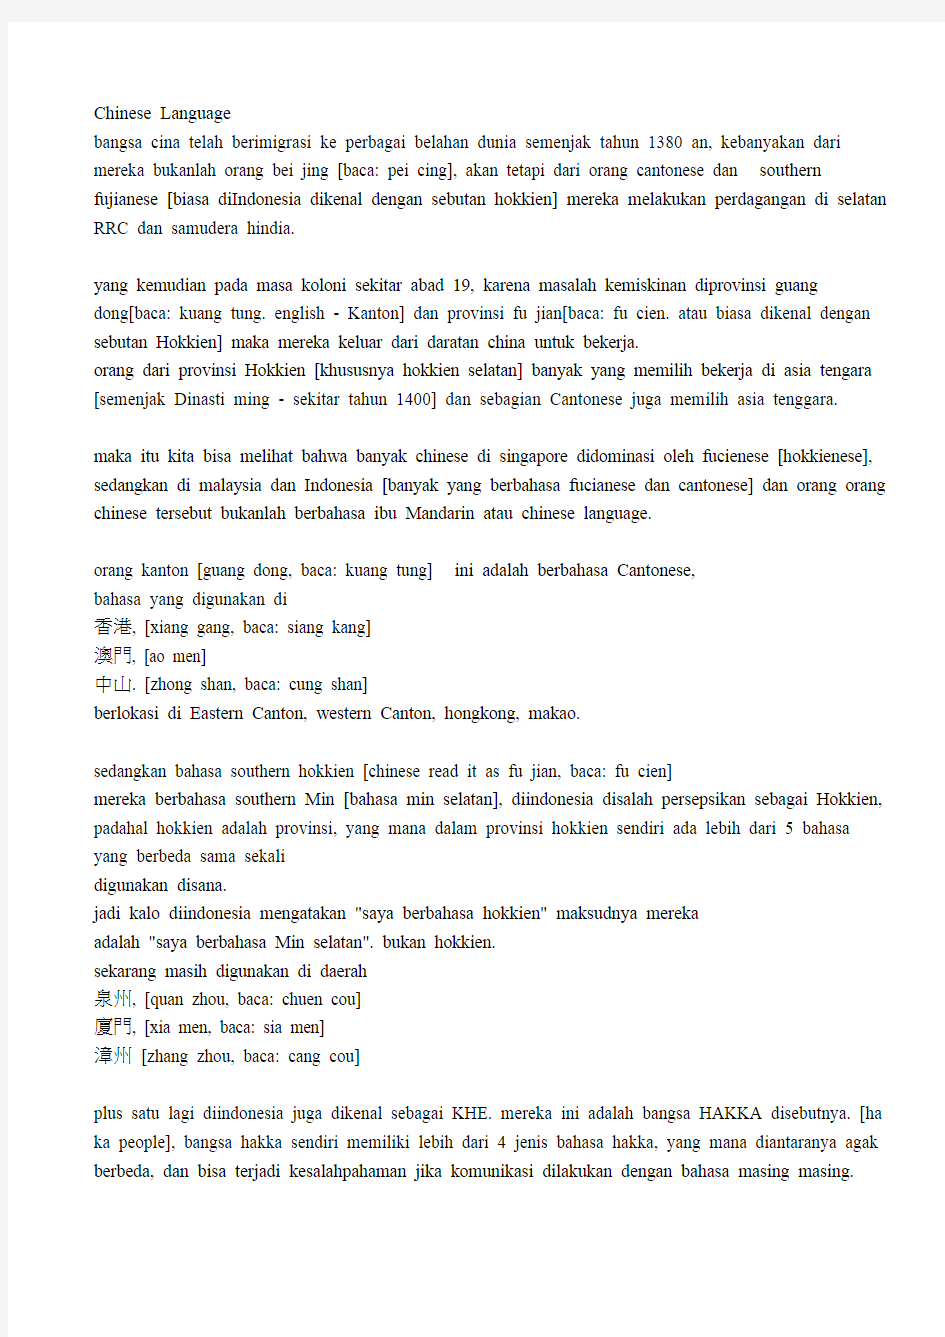 Chinese Language history [Indonesian Language]